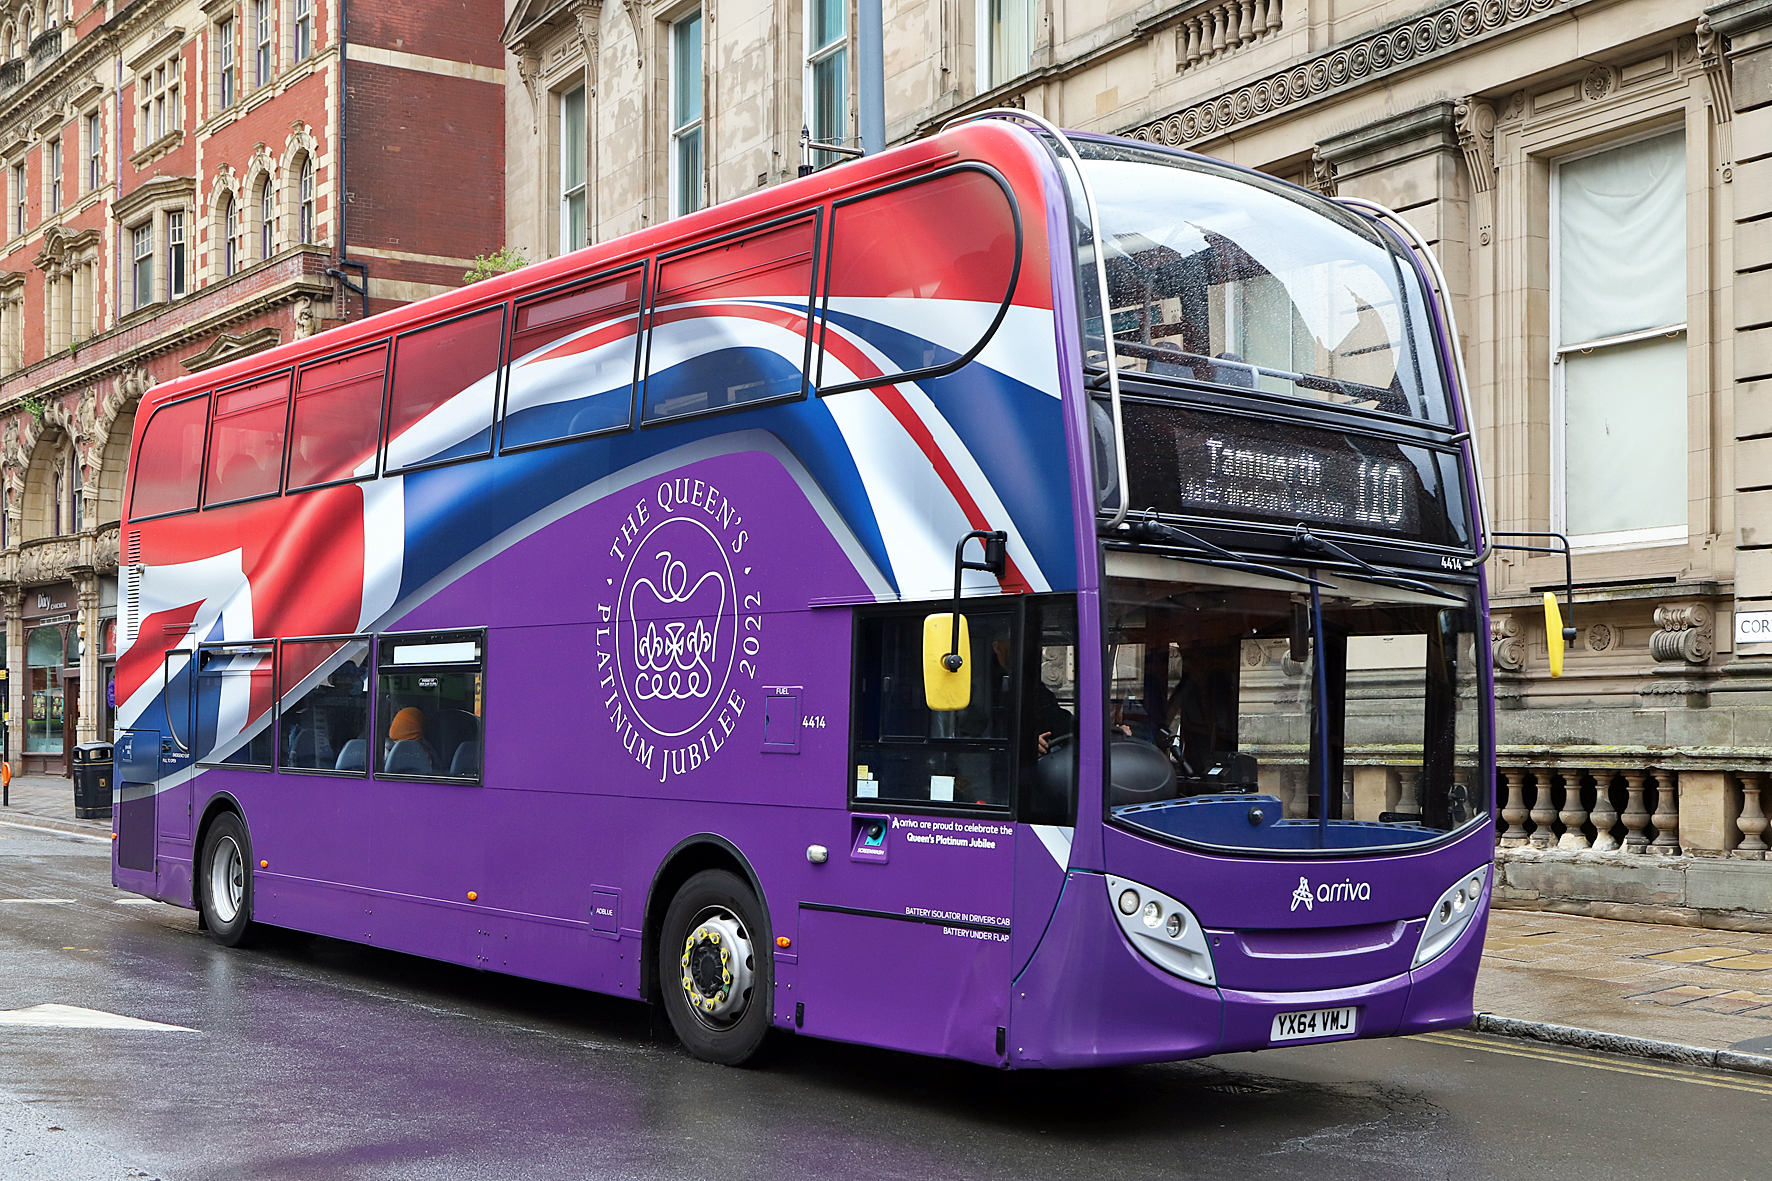 GALLERY: Jubilee buses retrospective